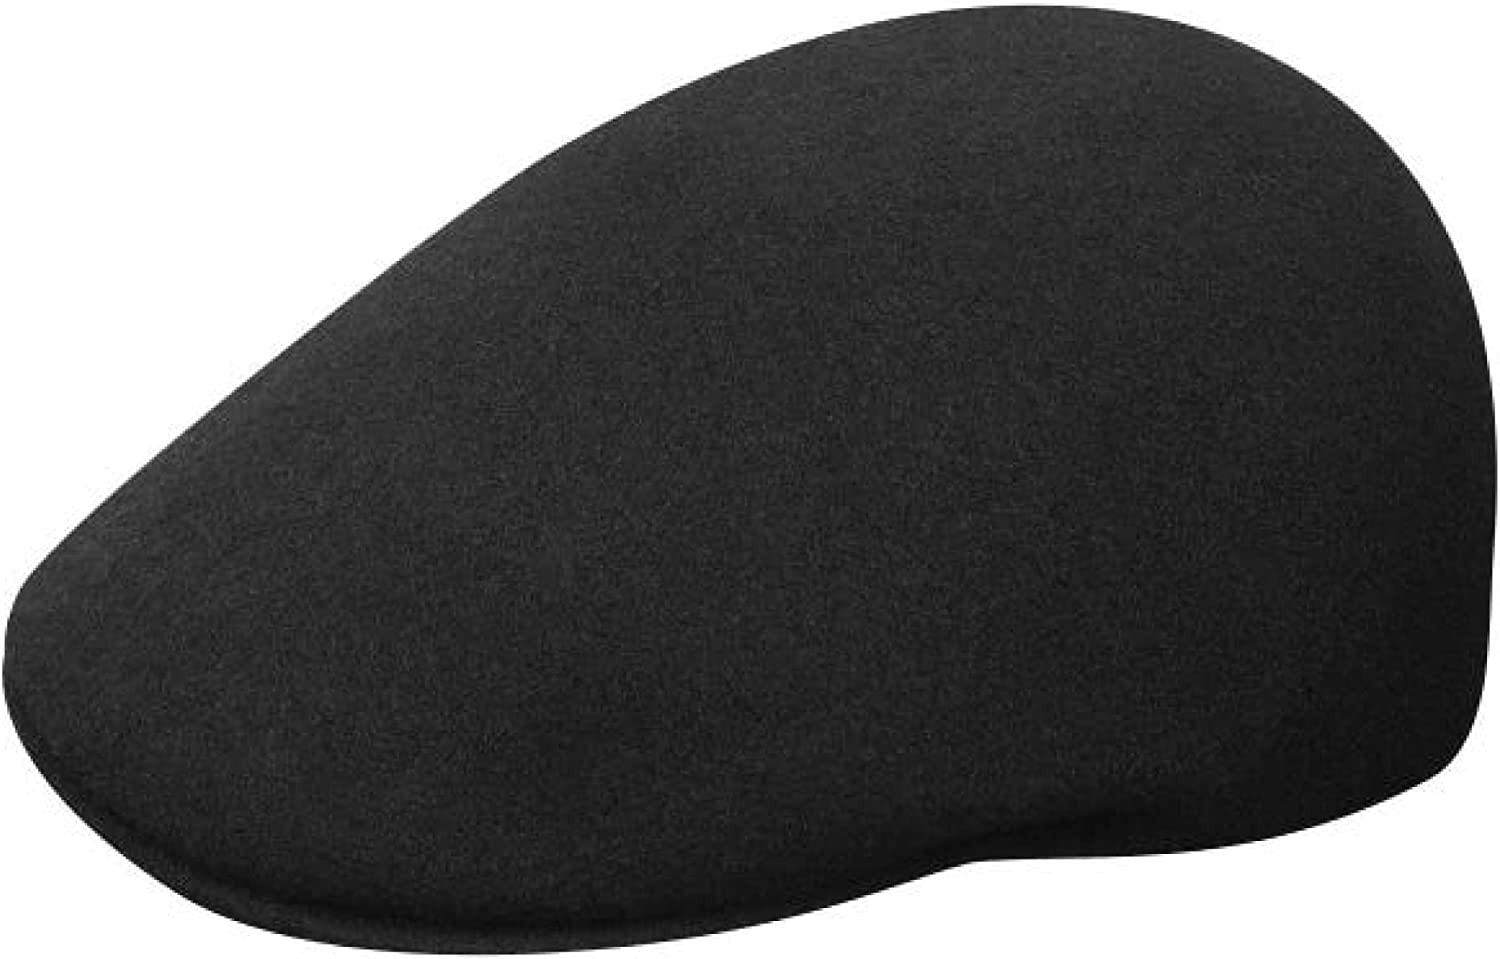 Kangol Seamless Wool 507 Felt Hat for Men and Women - Black/Gold - S